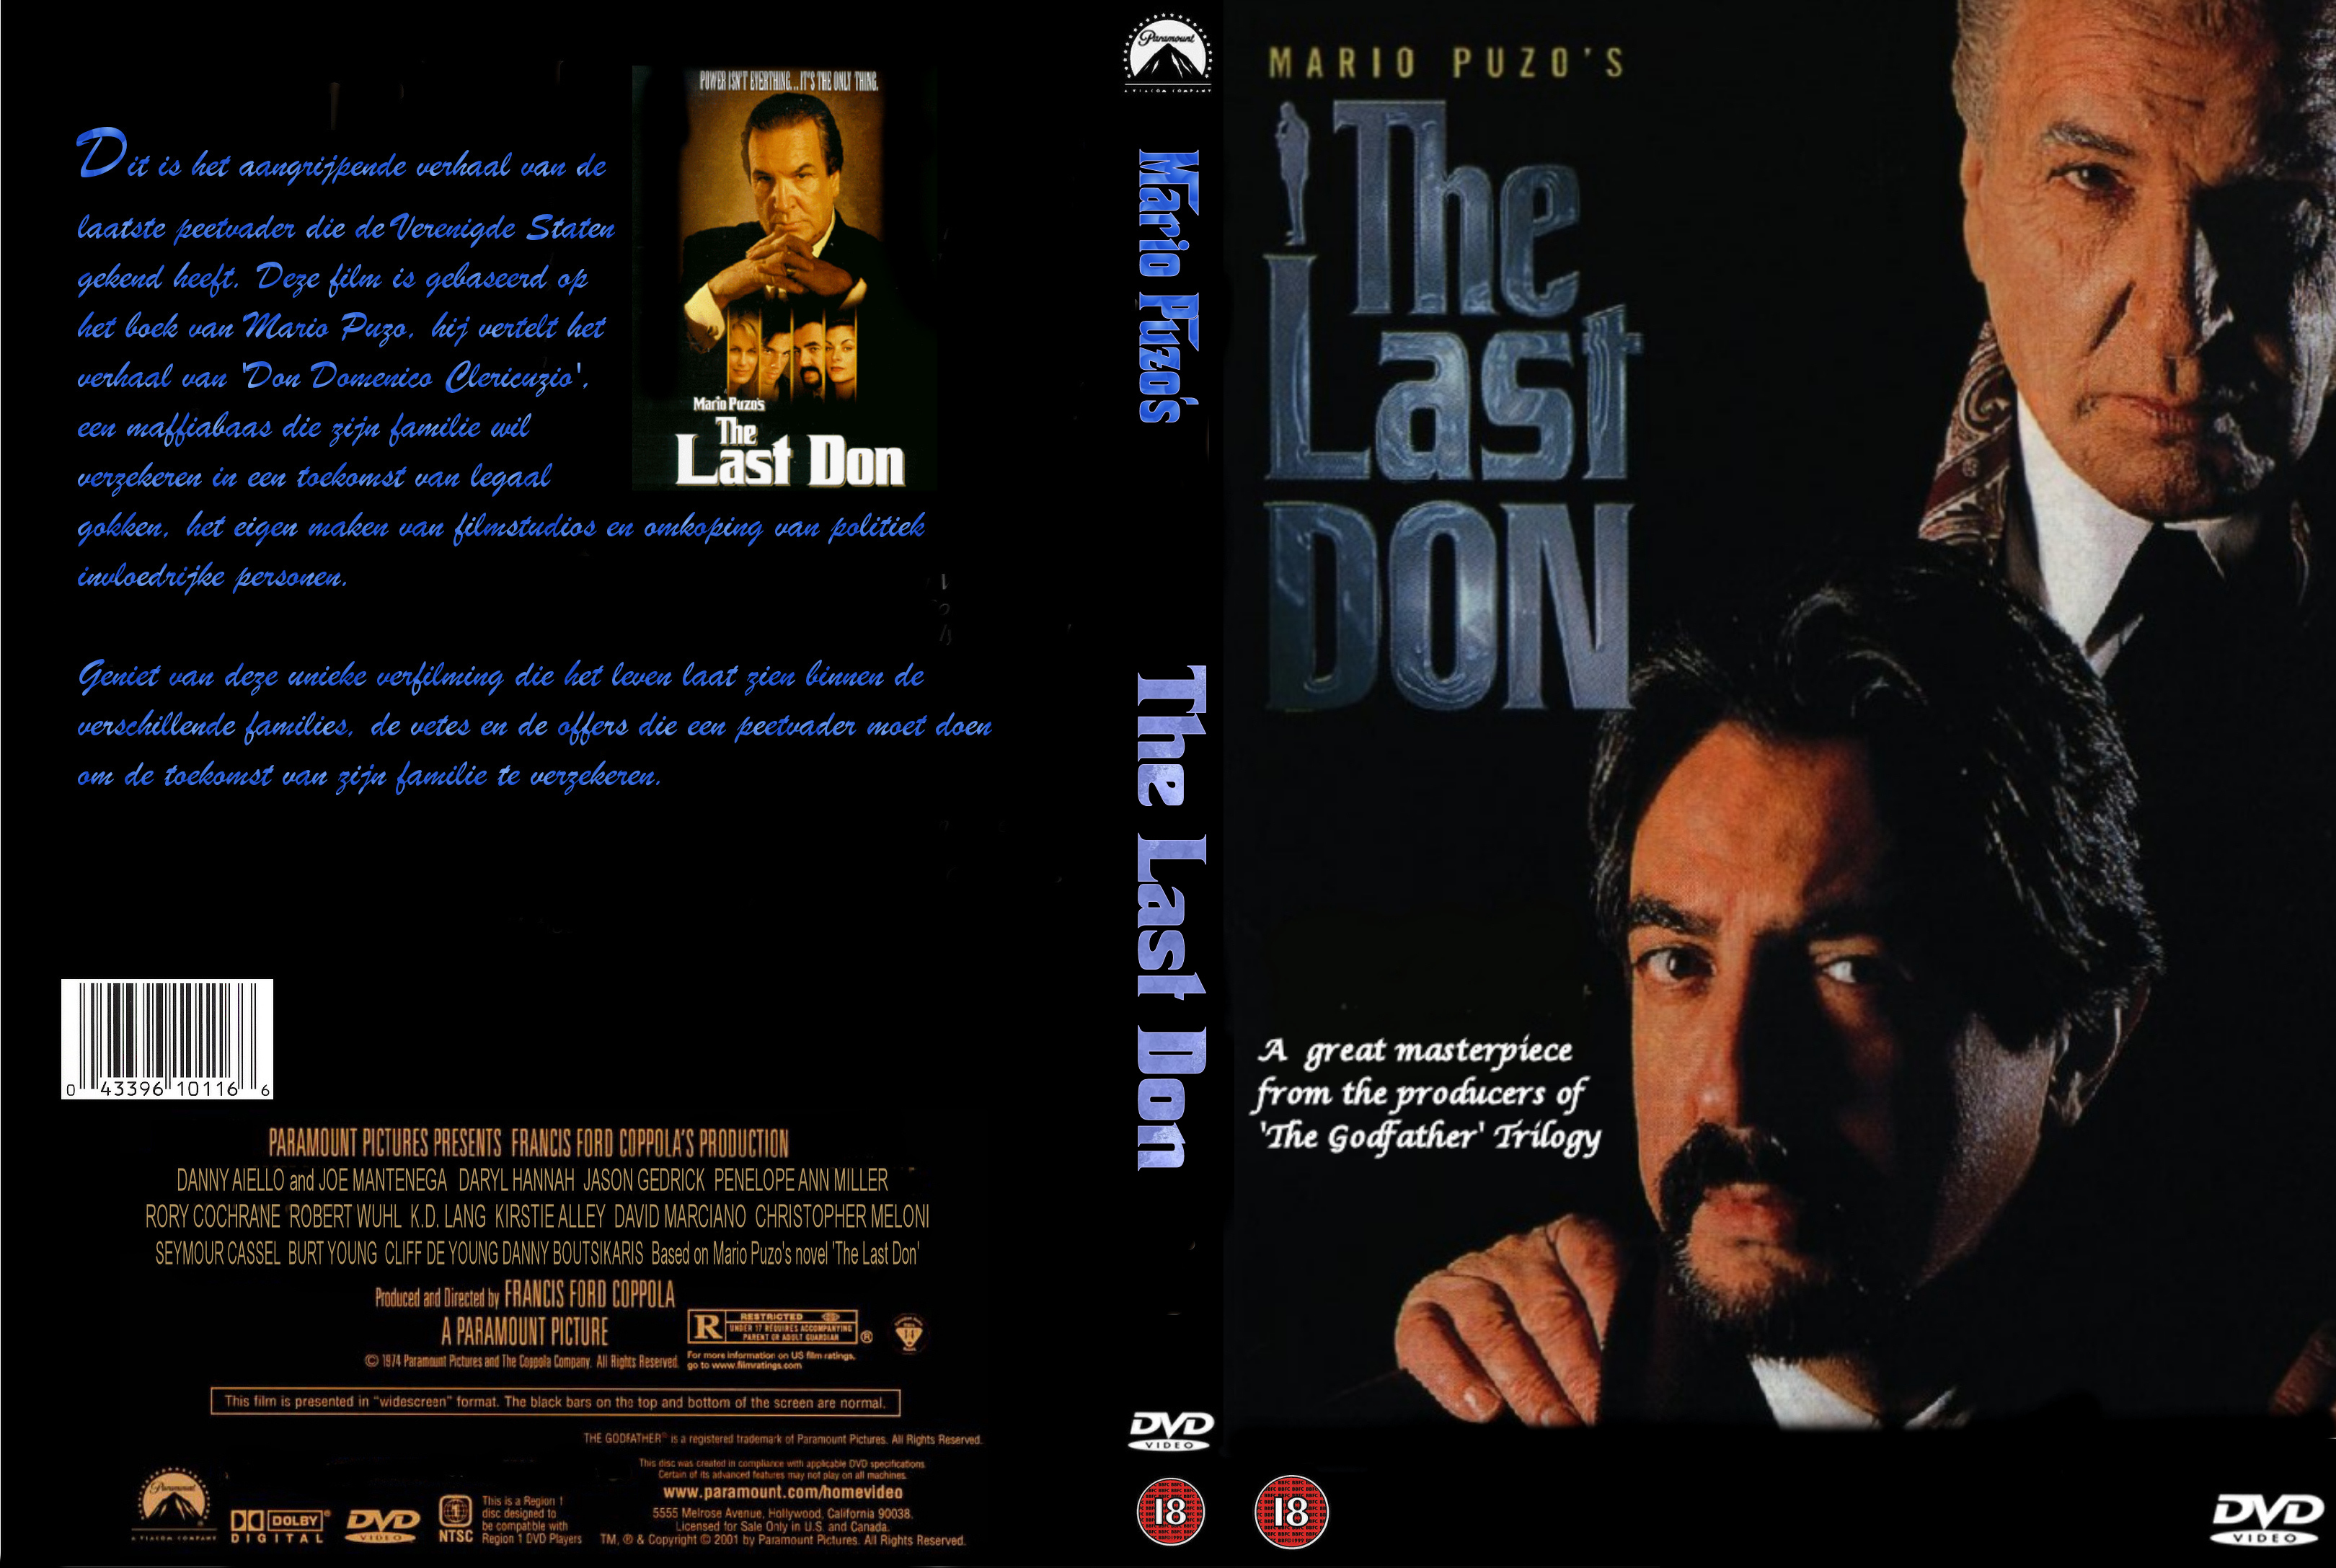 Дон хай. The last don. The Godfather Trilogy. Последний Дон DVD. Последний Дон 2 DVD.